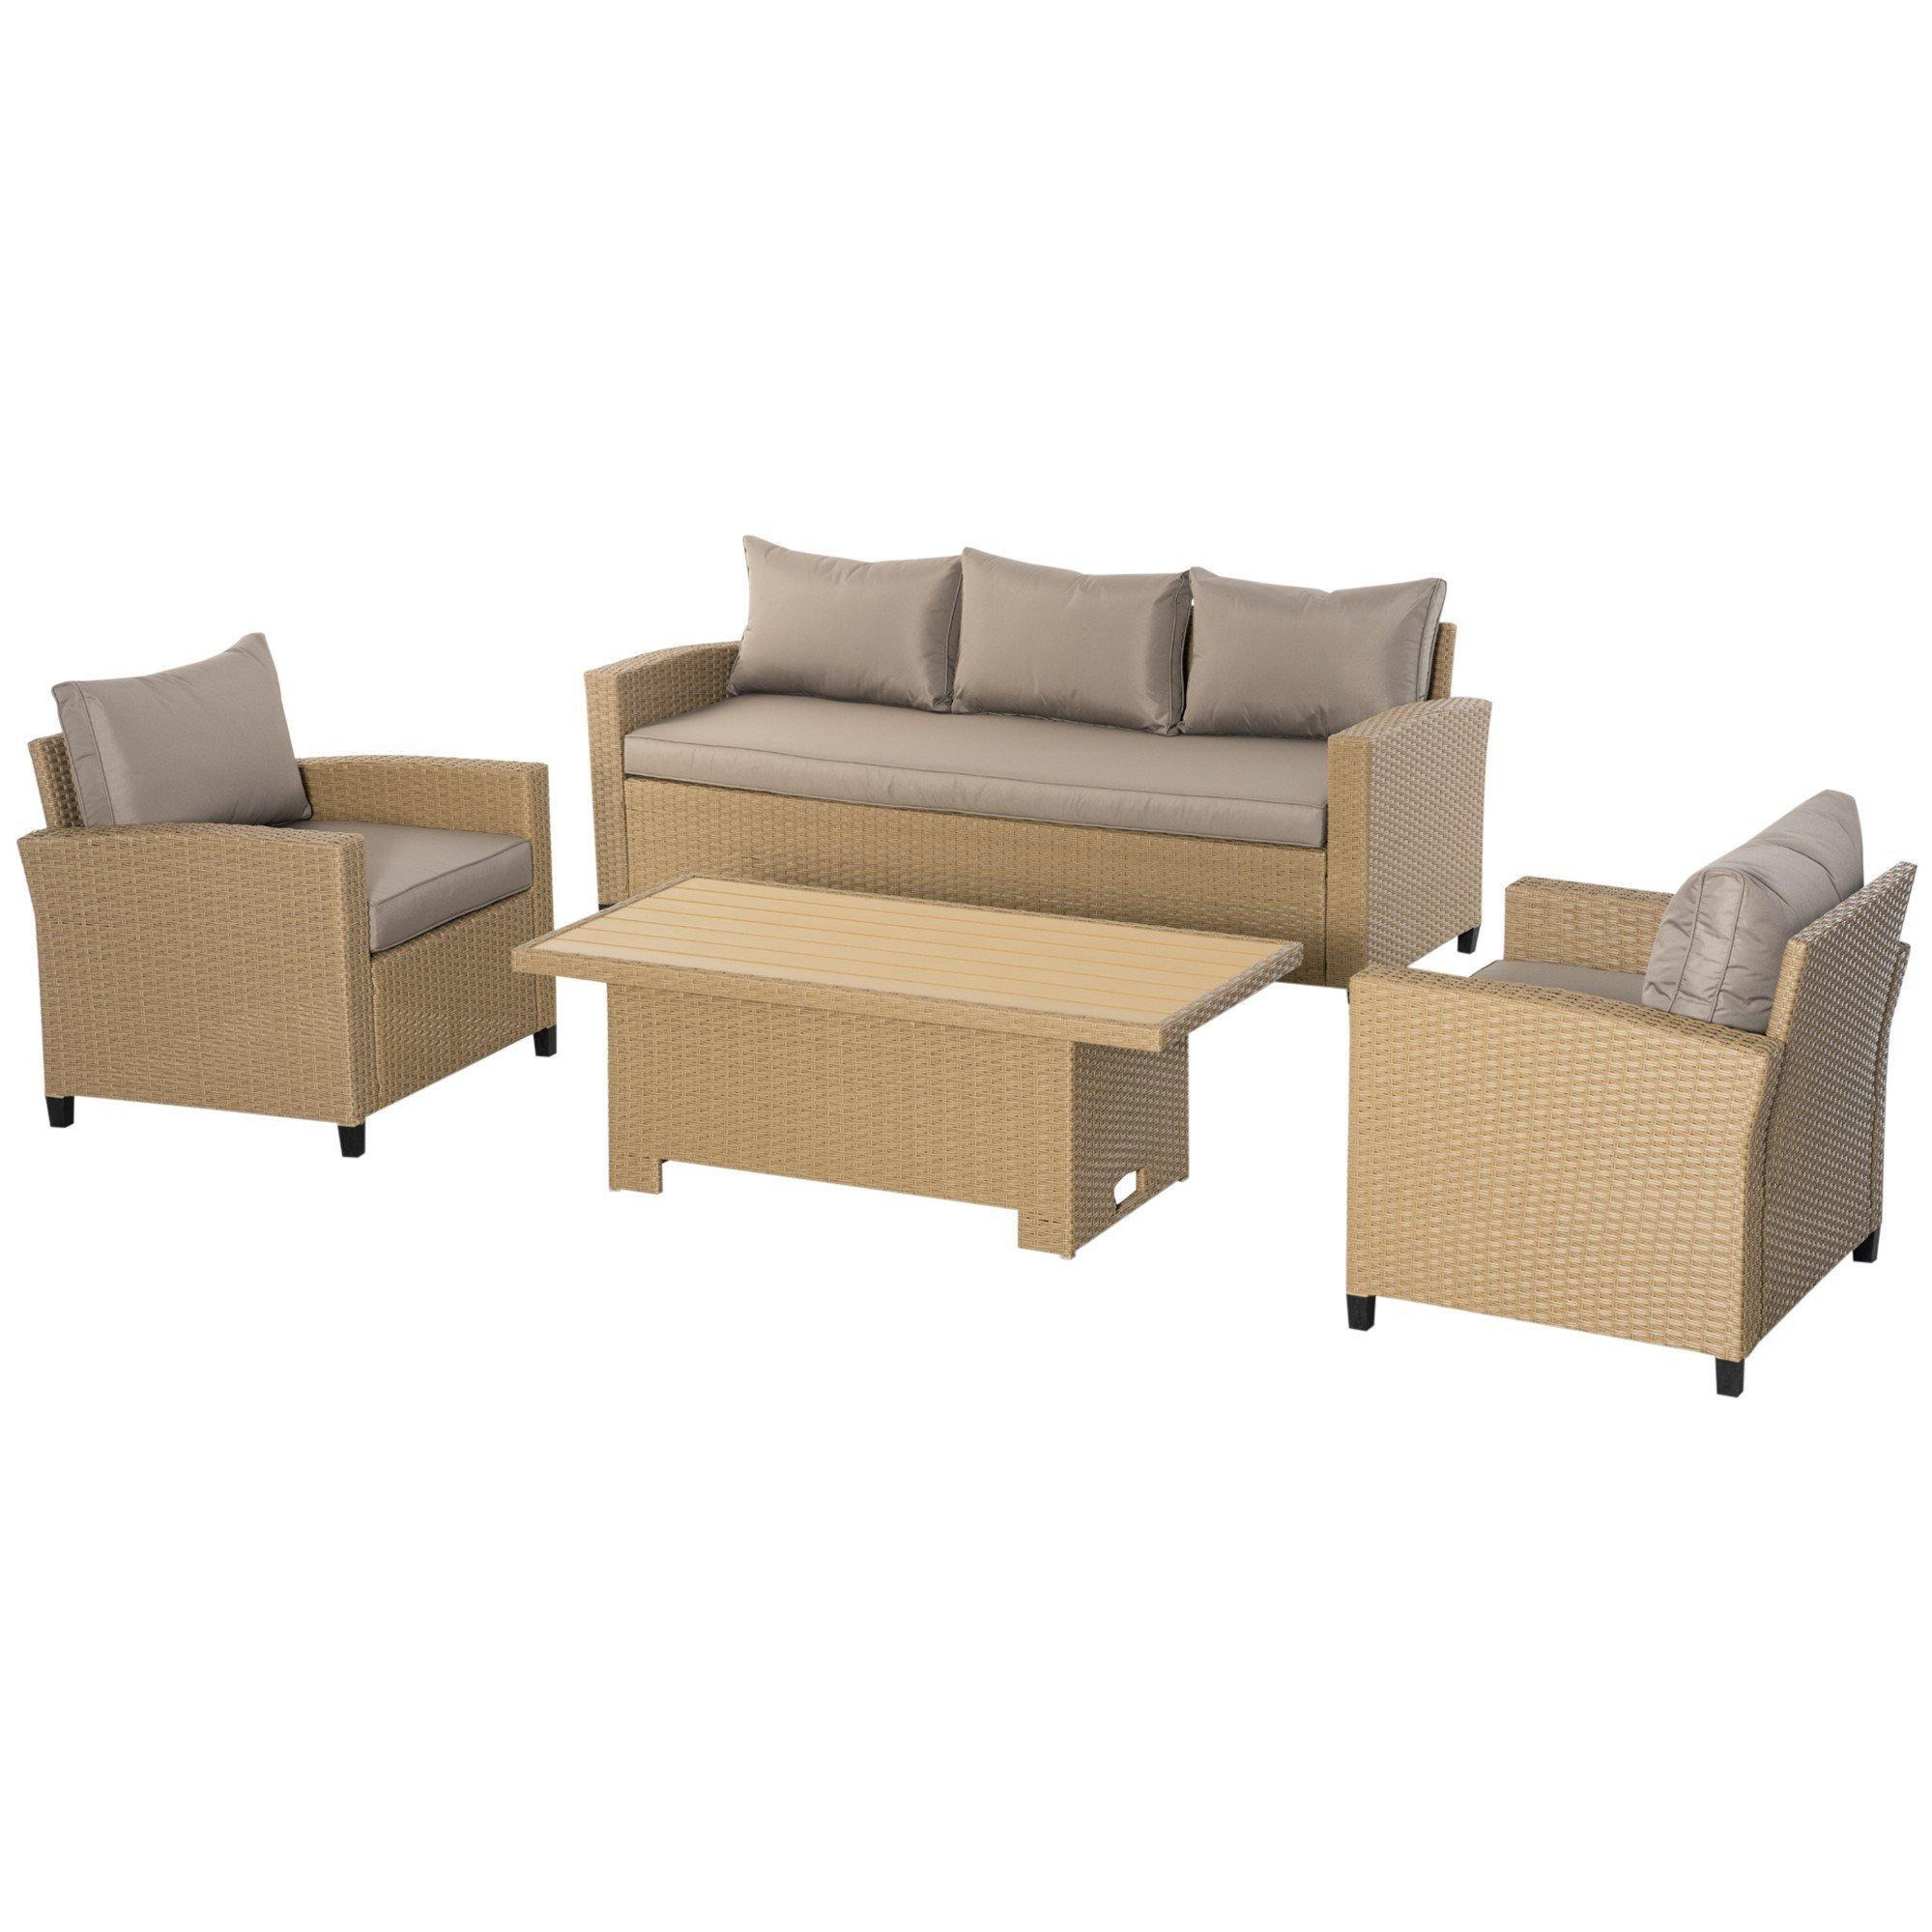 4 PCS Outdoor PE Rattan Aluminium Conversation Sofa Set w/ Table & Cushions - image 1